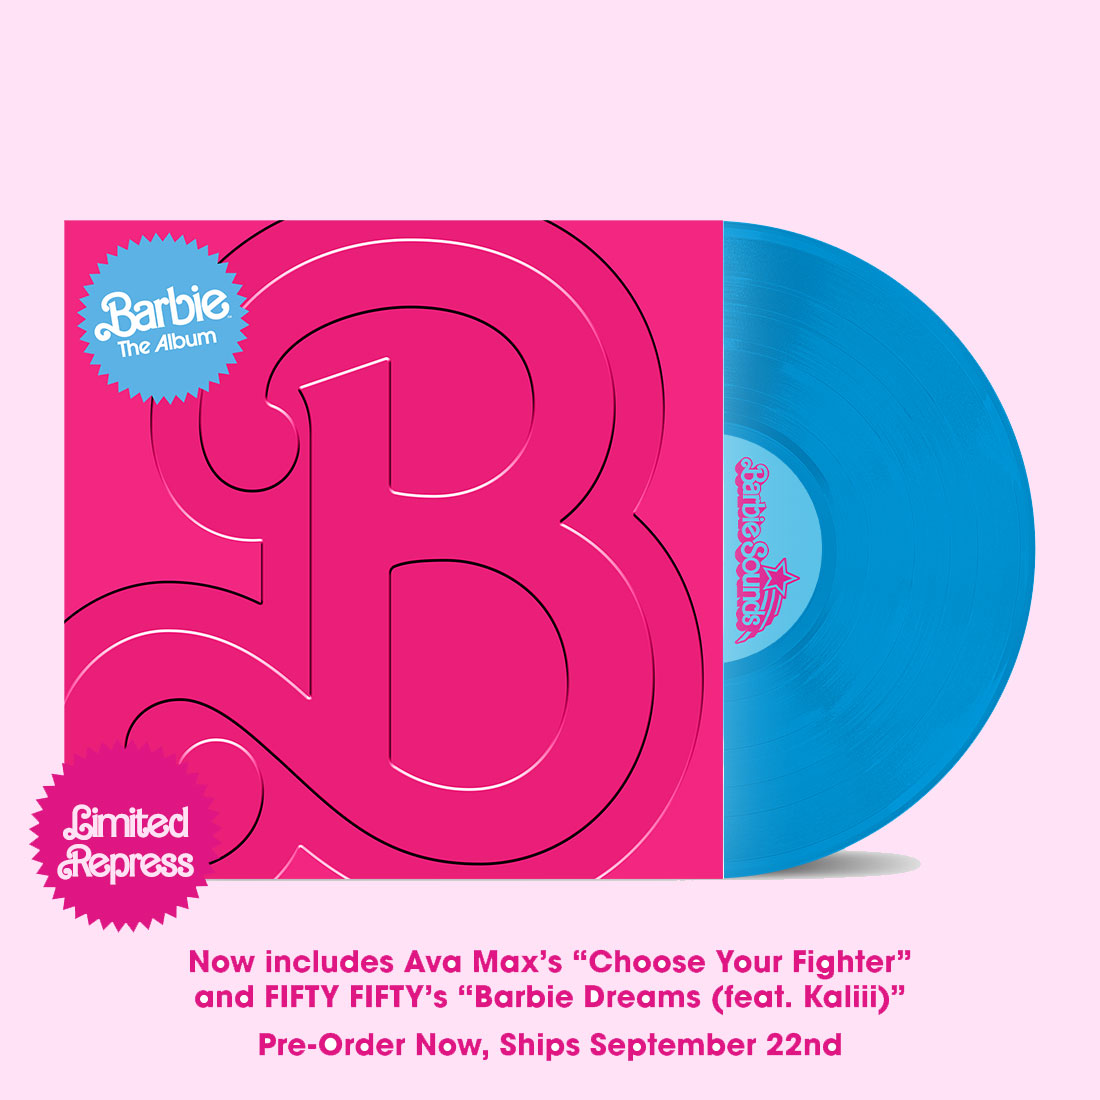 Sky Blue Vinyl (Limited Edition Repress)